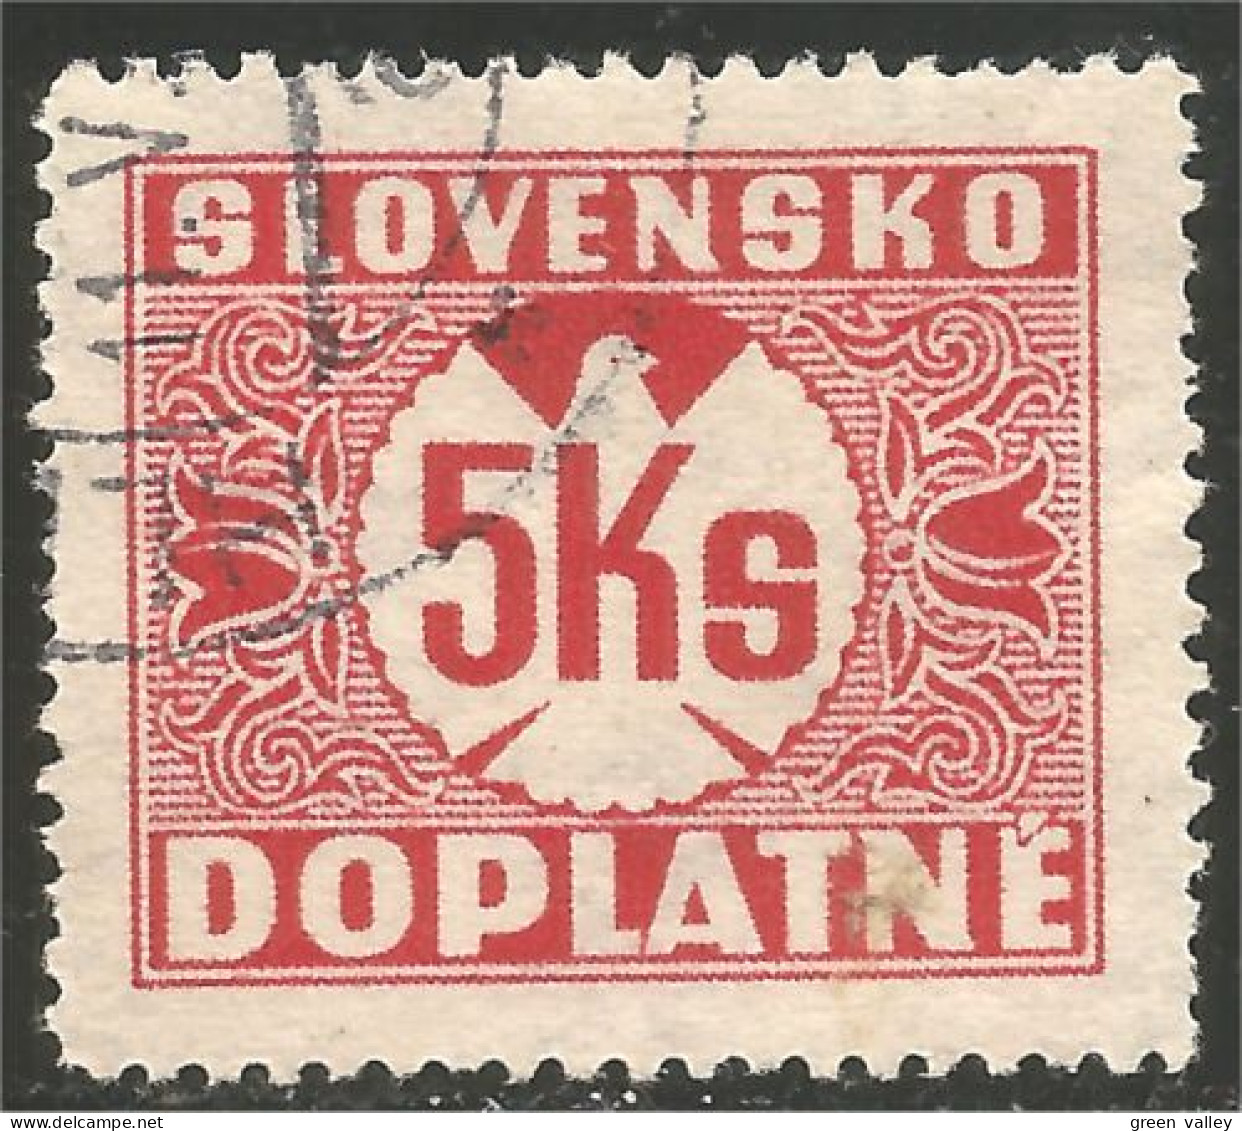 810 Slovensko Slovakia 1941 Postage Due Taxe 5 Ks Carmine (SLK-58c) - Gebruikt